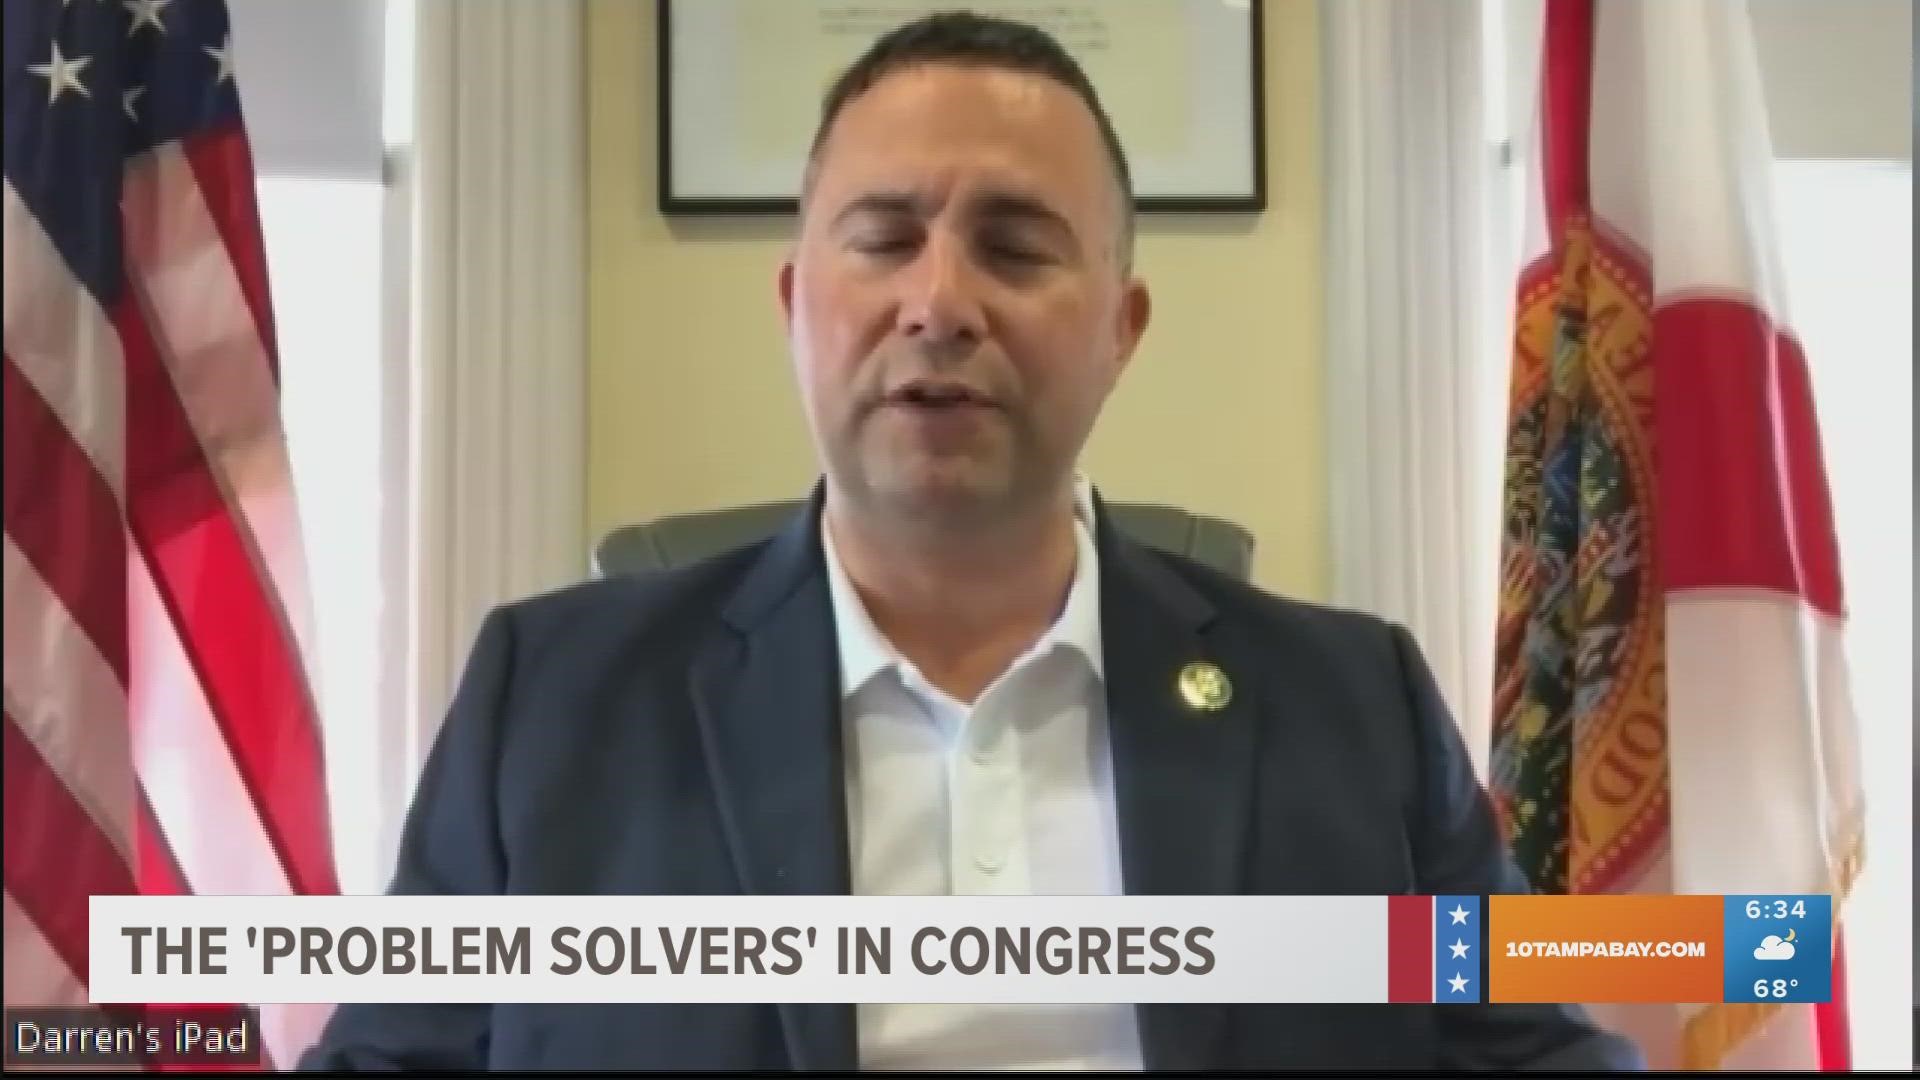 Florida U.S. Rep. Darren Soto serves House Problem Solvers Caucus